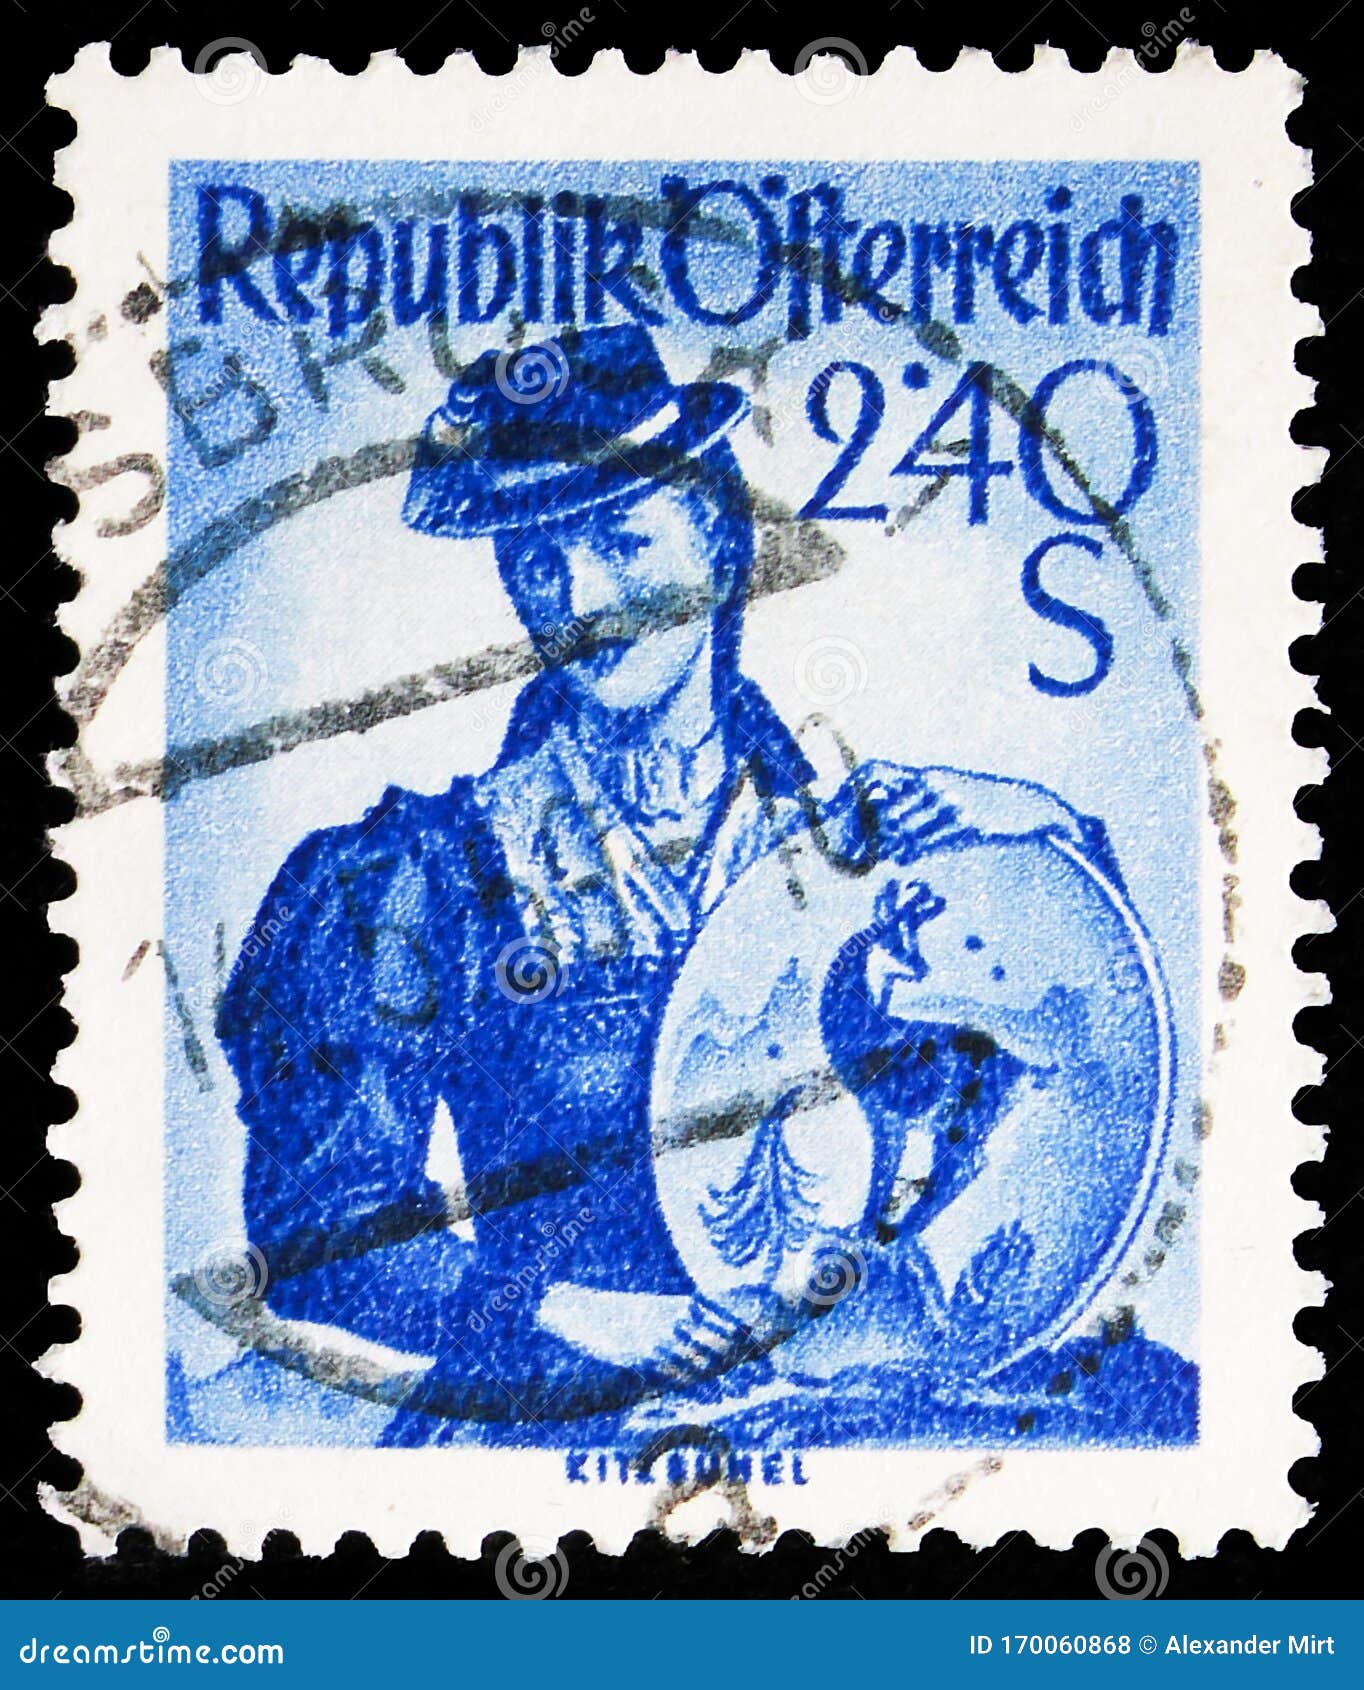 Postage Stamp Printed in Austria Shows Tyrol, Kitzbuhel, Provincial ...